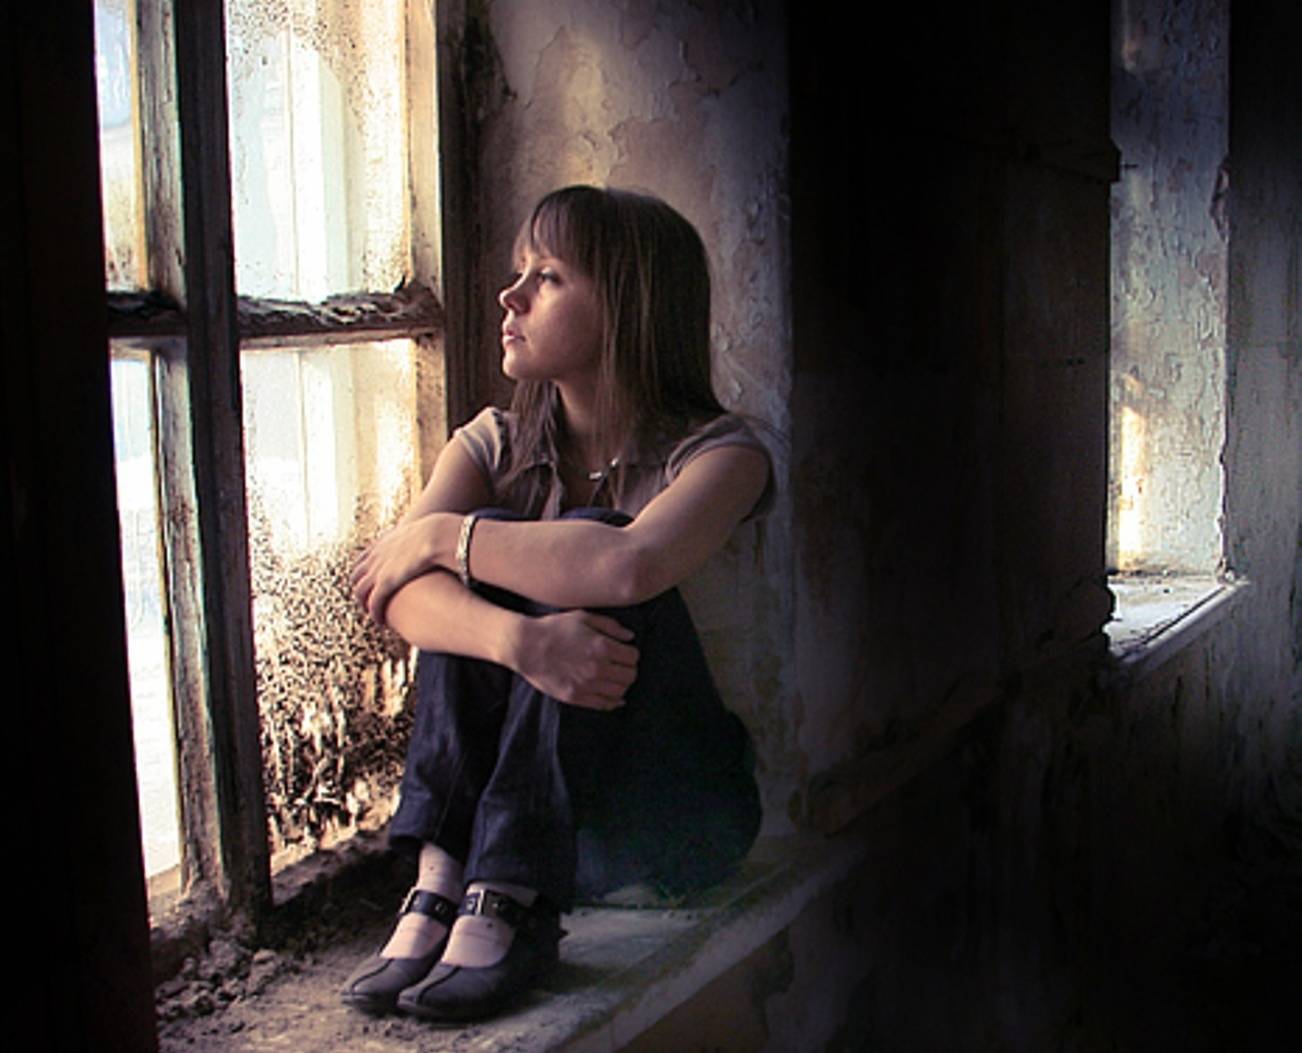 Снова одинока я сижу поет девушка. Девочка у окна. Девушка грустит. Грустная девушка. Сидит у окна.